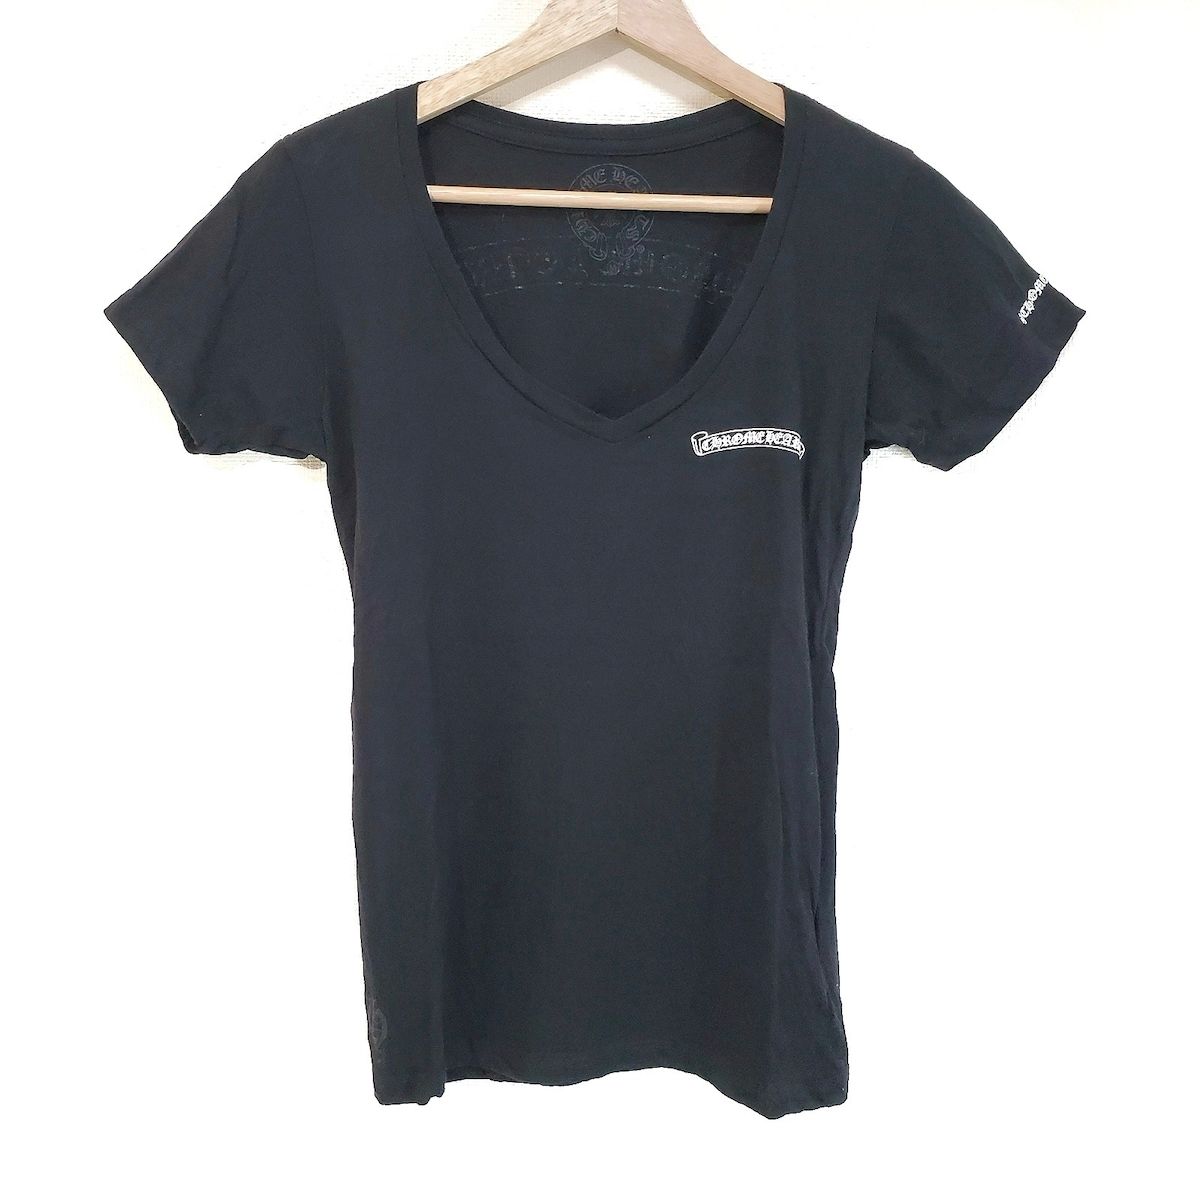 Chrome hearts(クロムハーツ) 半袖Tシャツ レディース美品 - 黒×白 V 